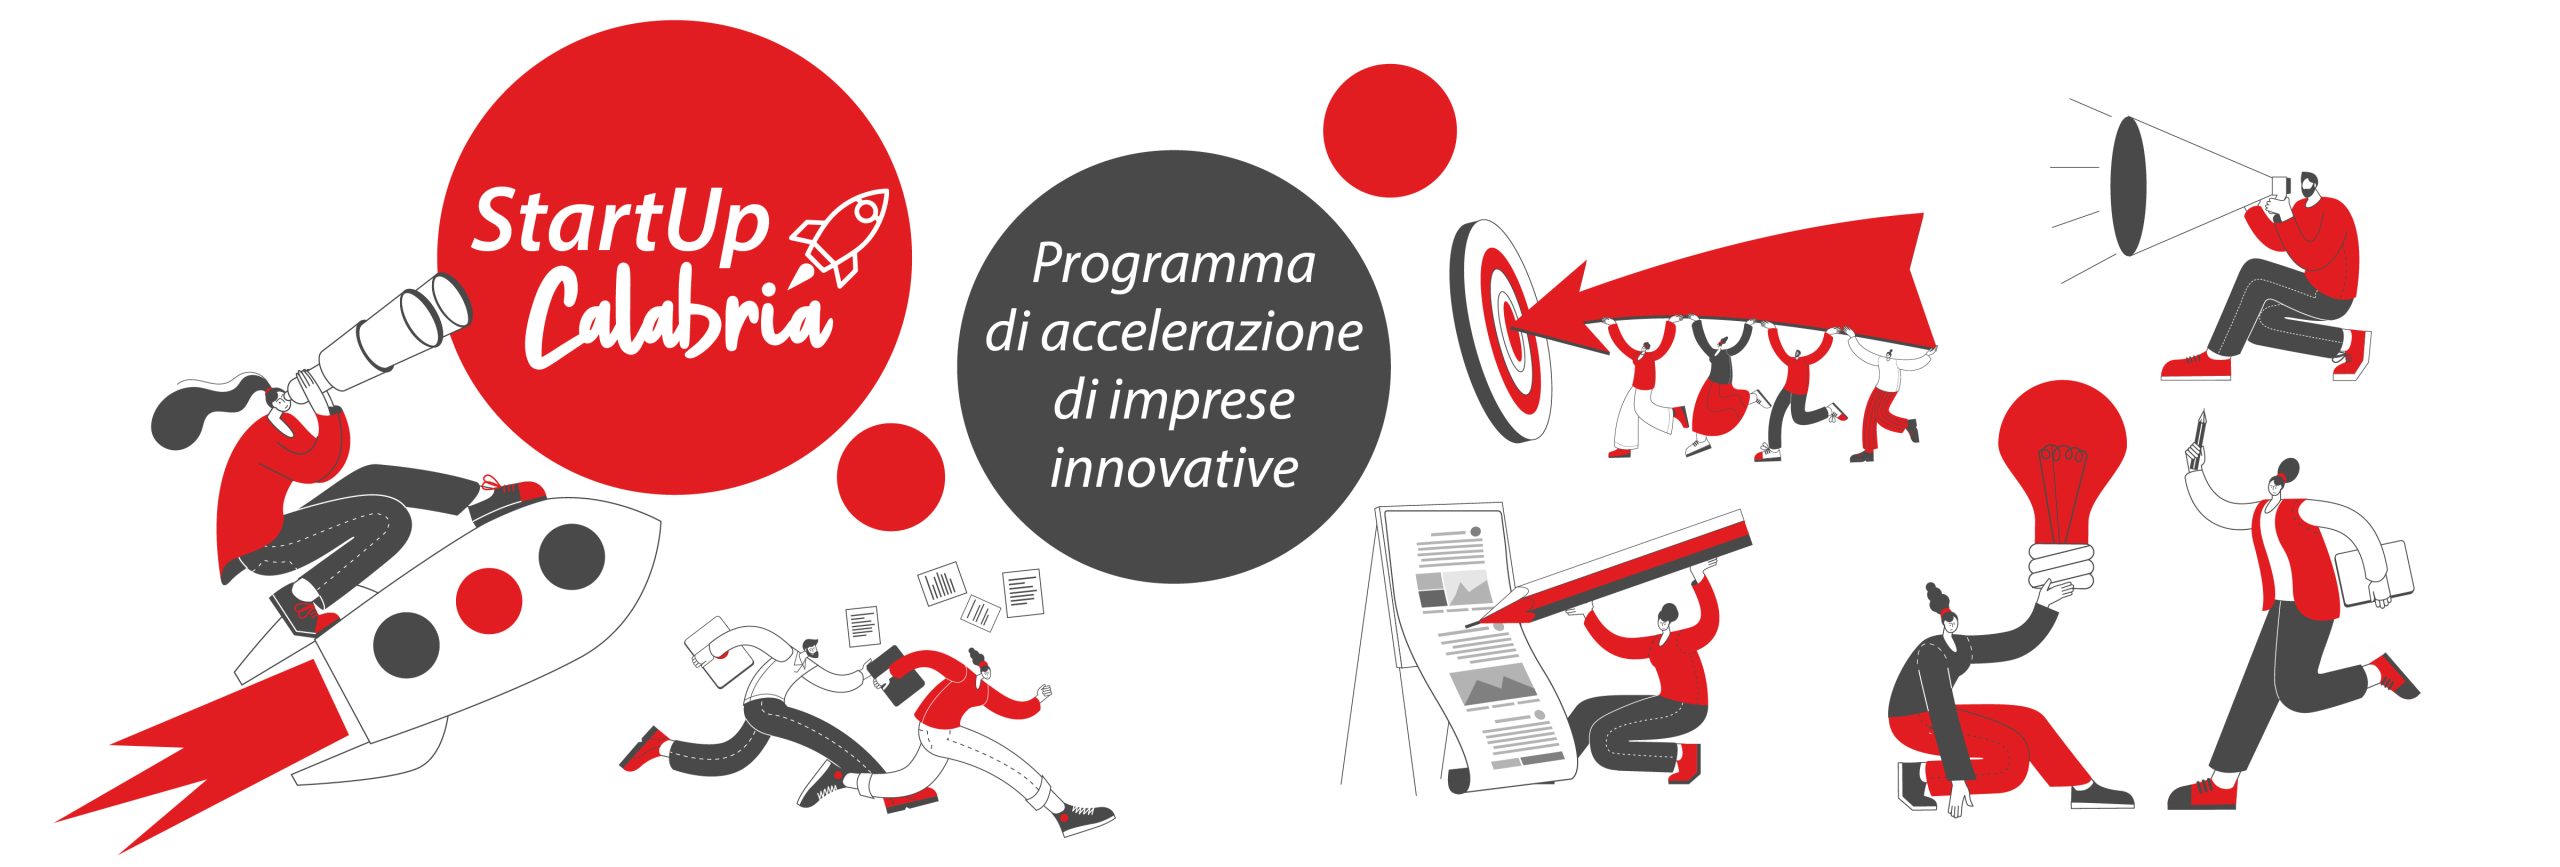 Programma di accelerazione “Startup Calabria”